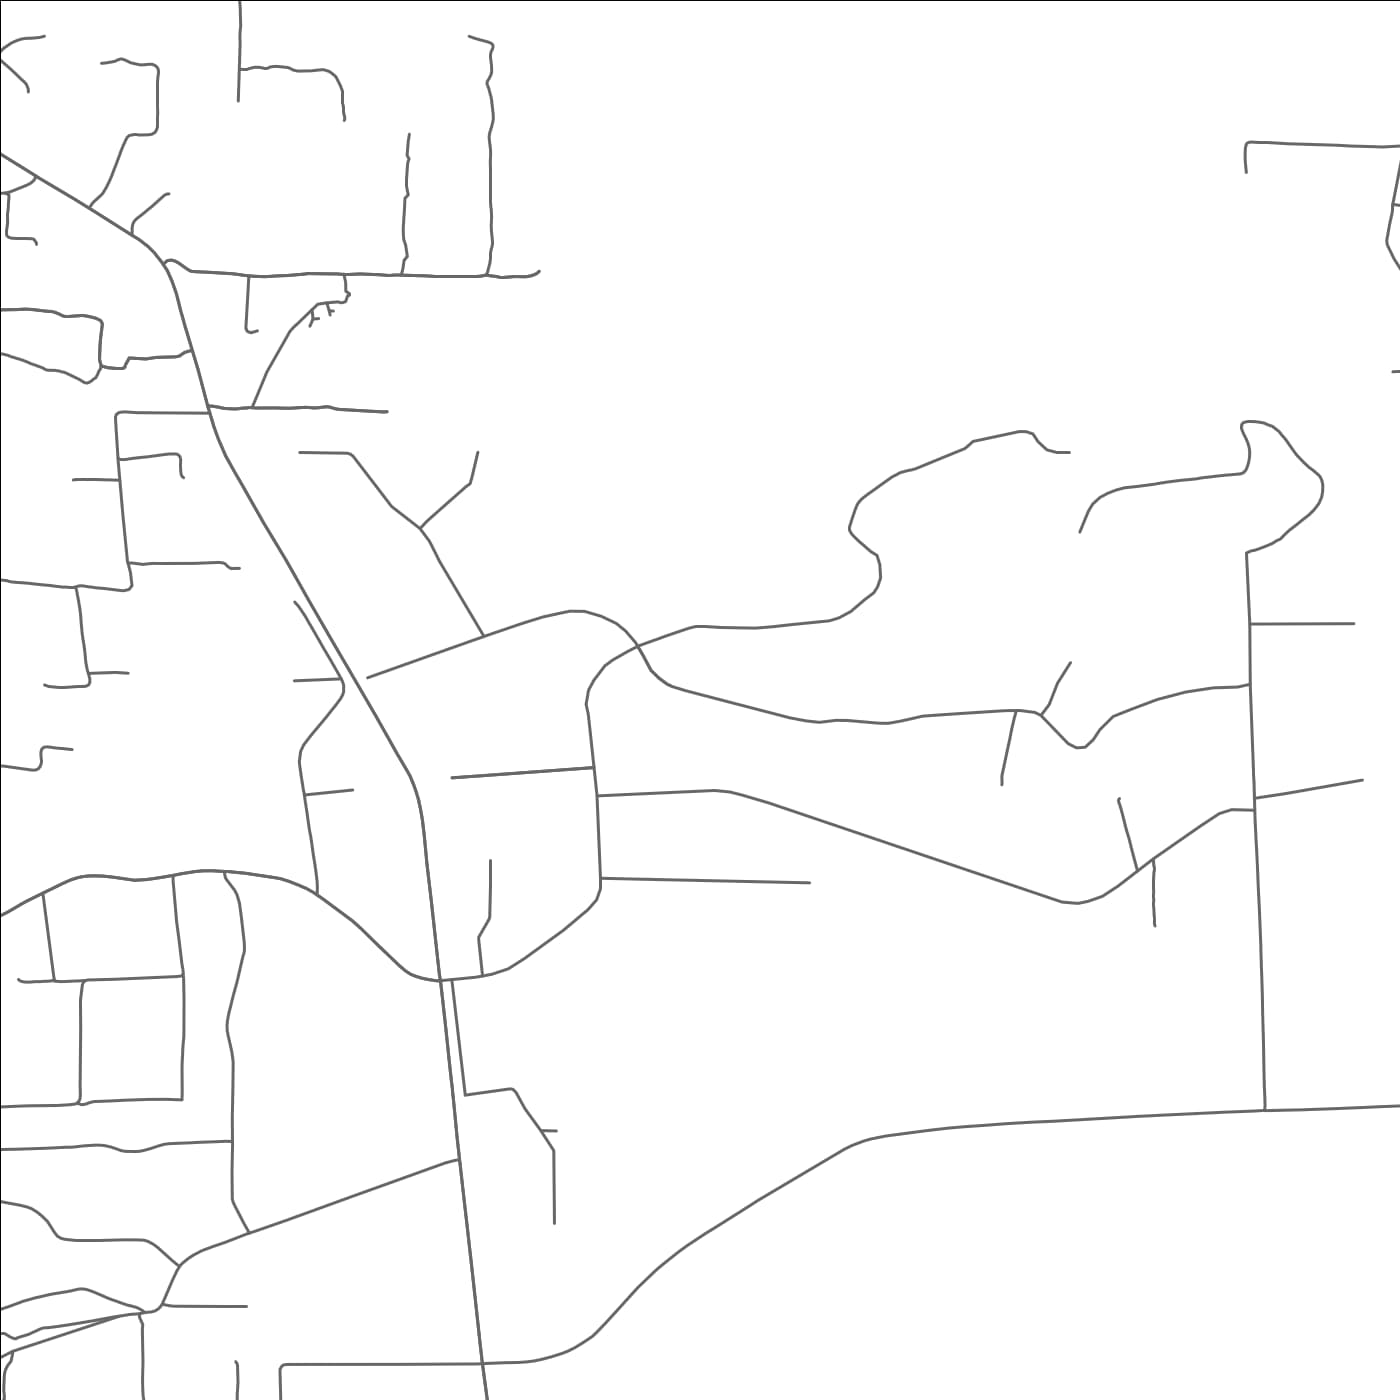 ROAD MAP OF WILLIAMSON, ARIZONA BY MAPBAKES